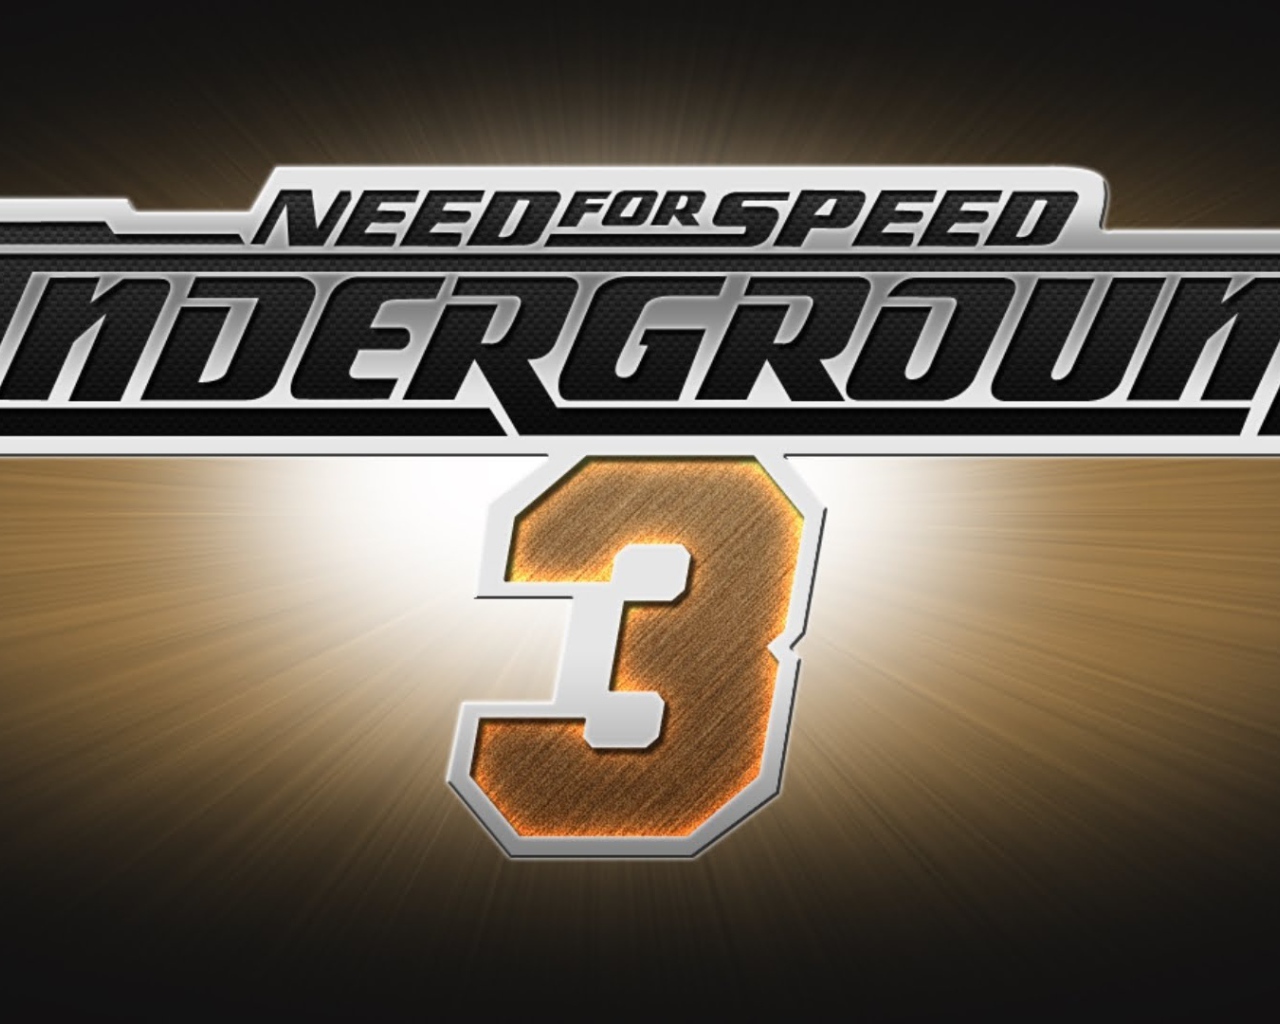 Need logo. Нфс лого. Need for Speed: Underground 2. Need for Speed Underground логотип. Логотипы из игр.